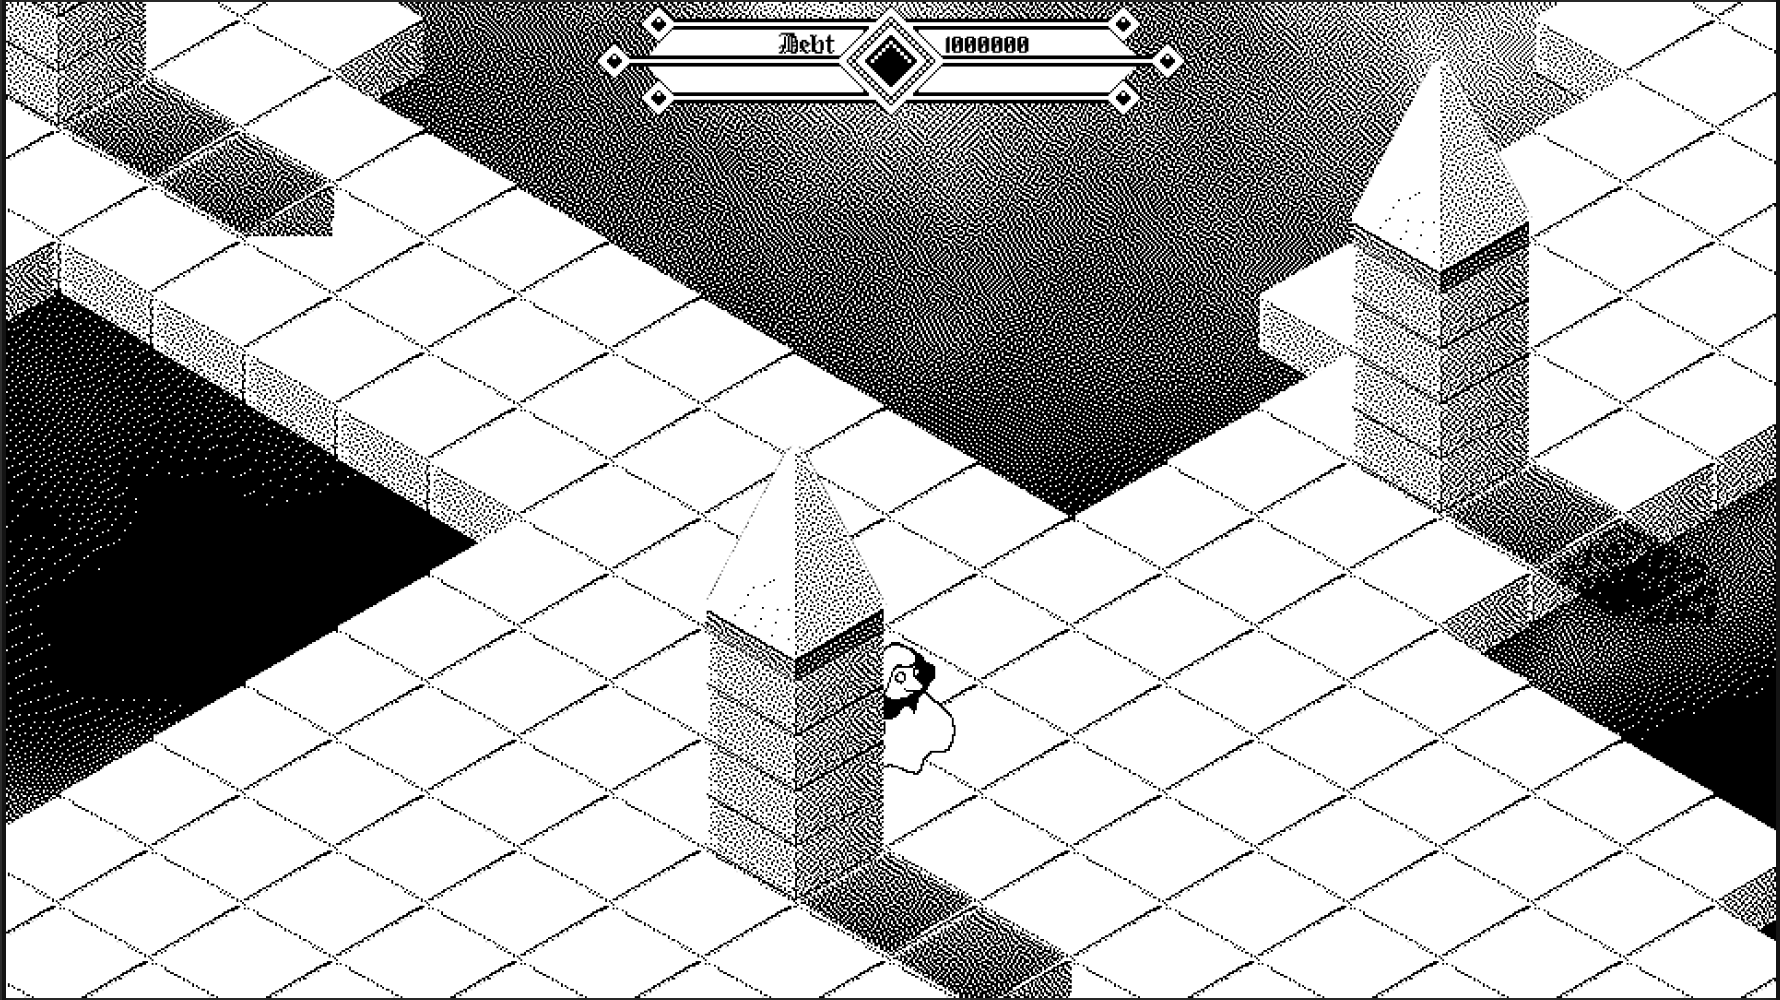 game screenshot of stacked blocks on grid